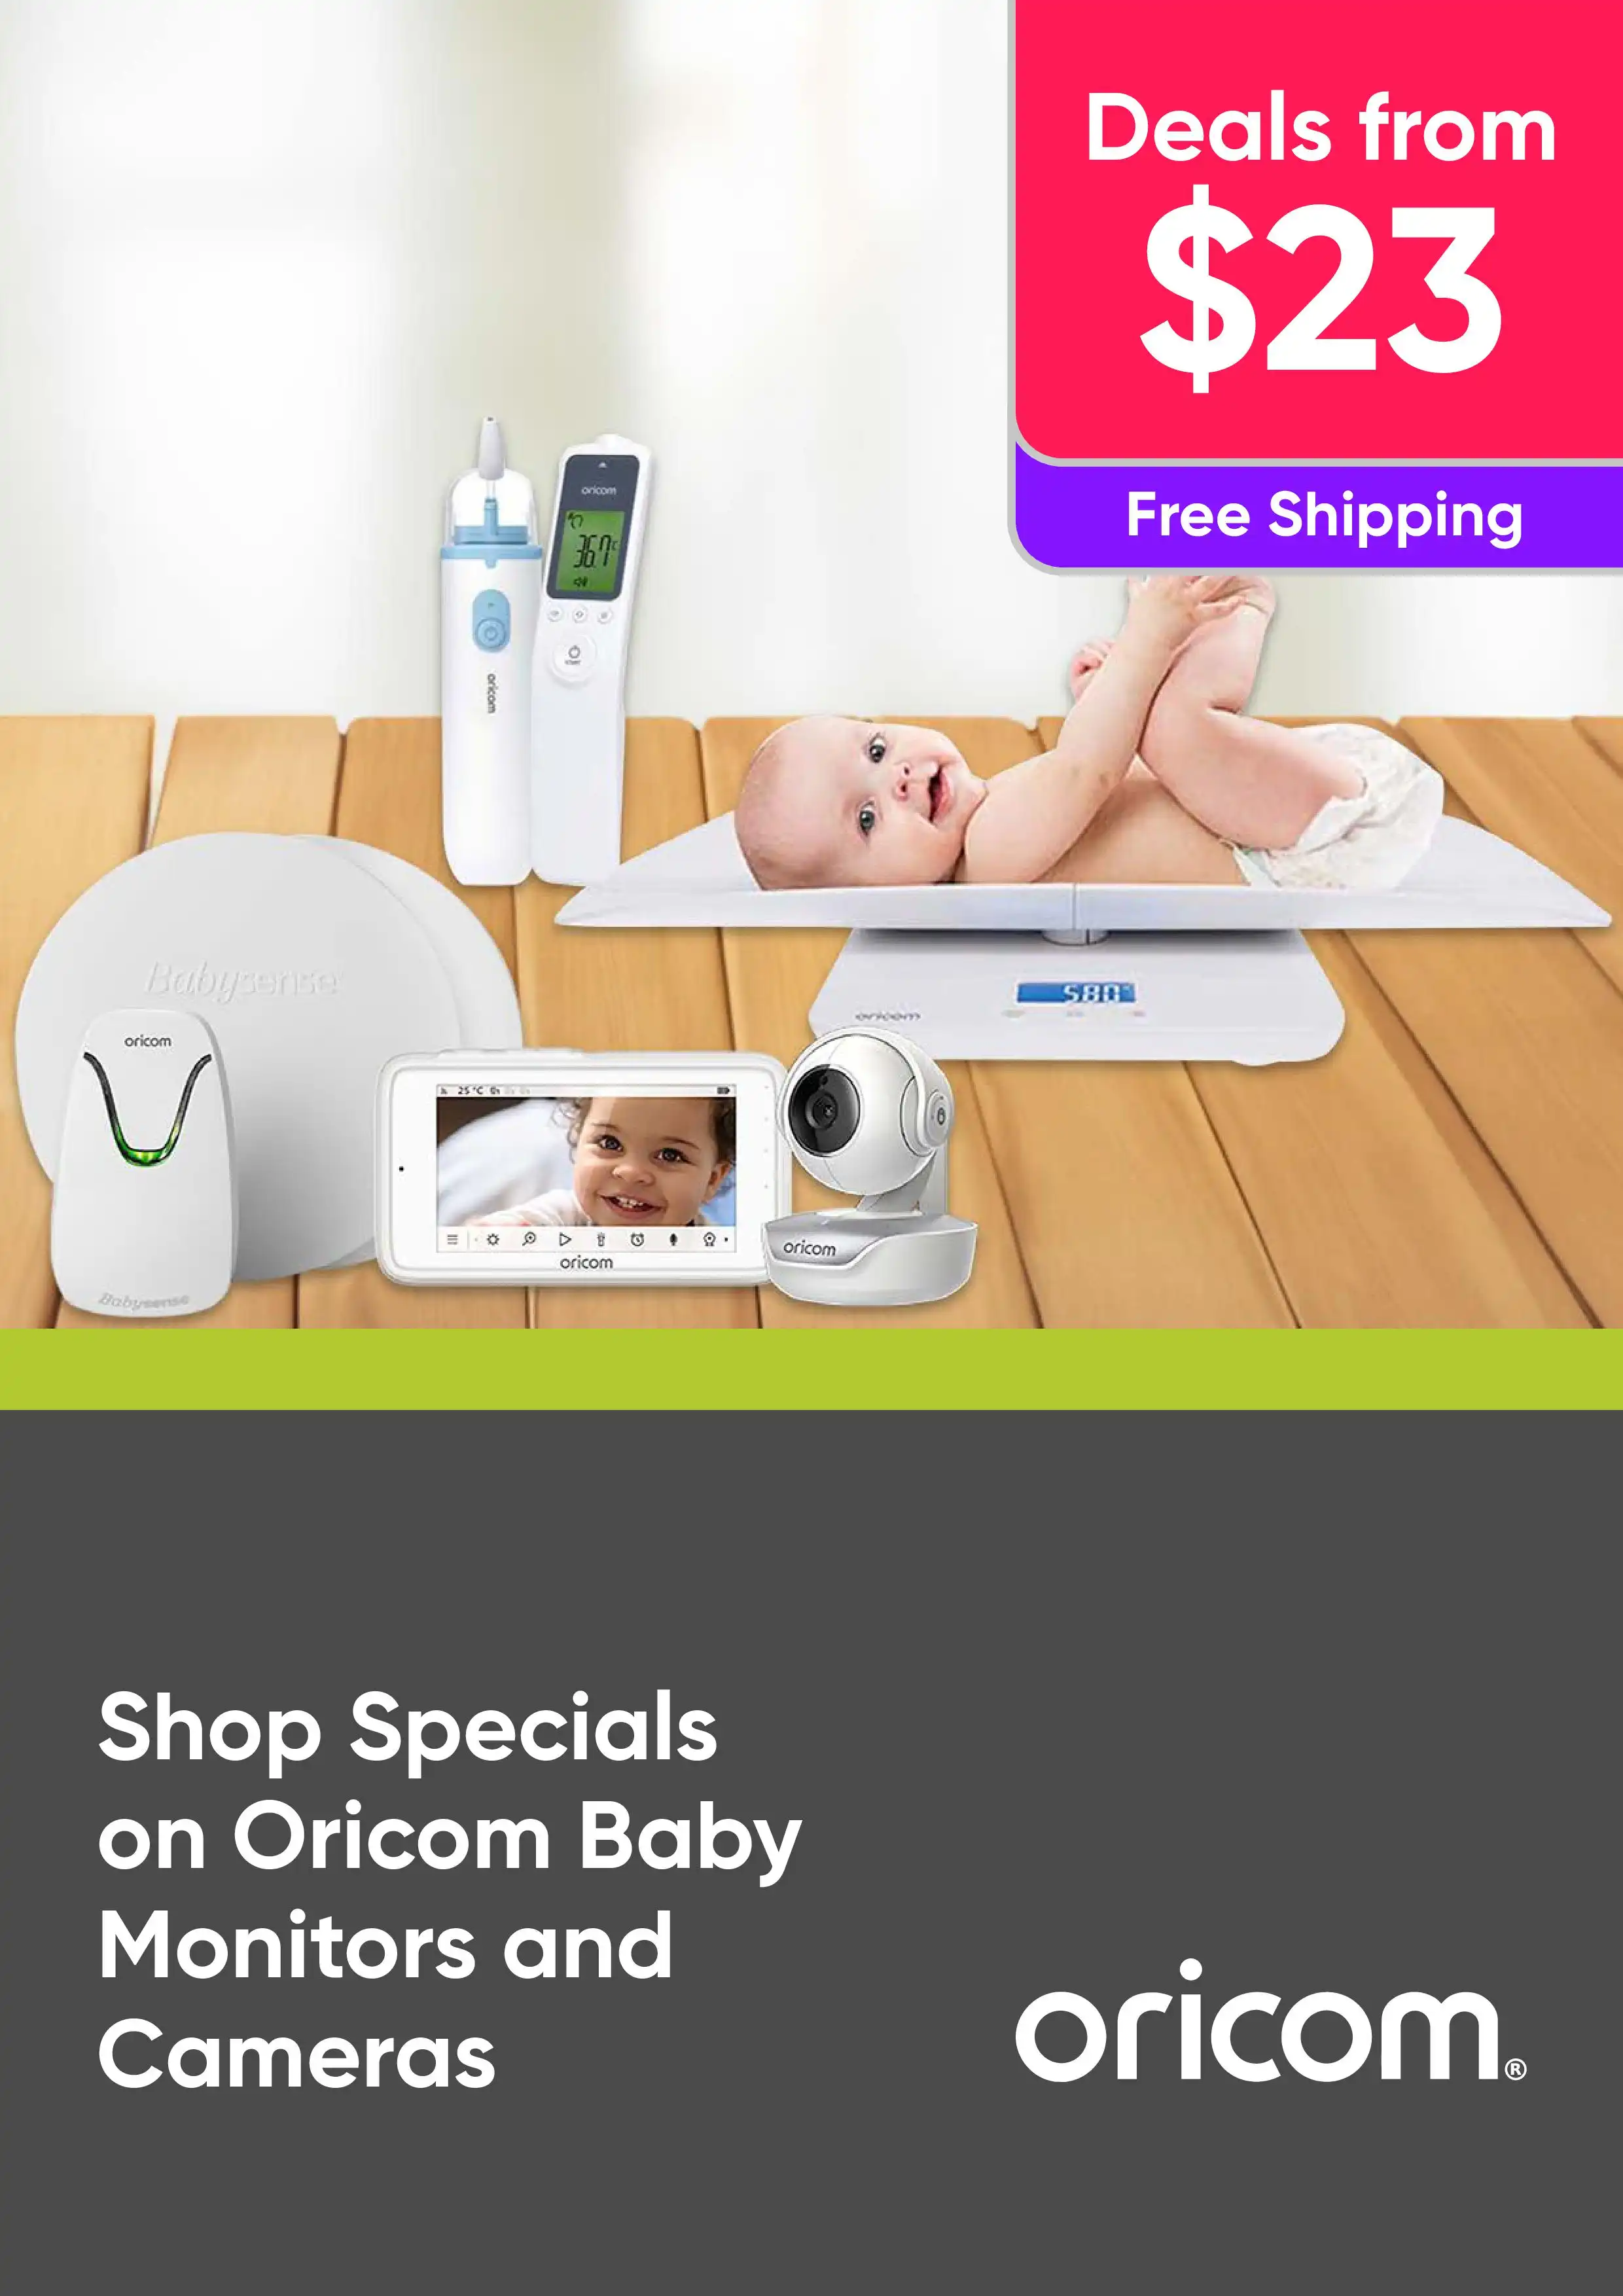 Shop Specials on Oricom Baby Monitors and Cameras